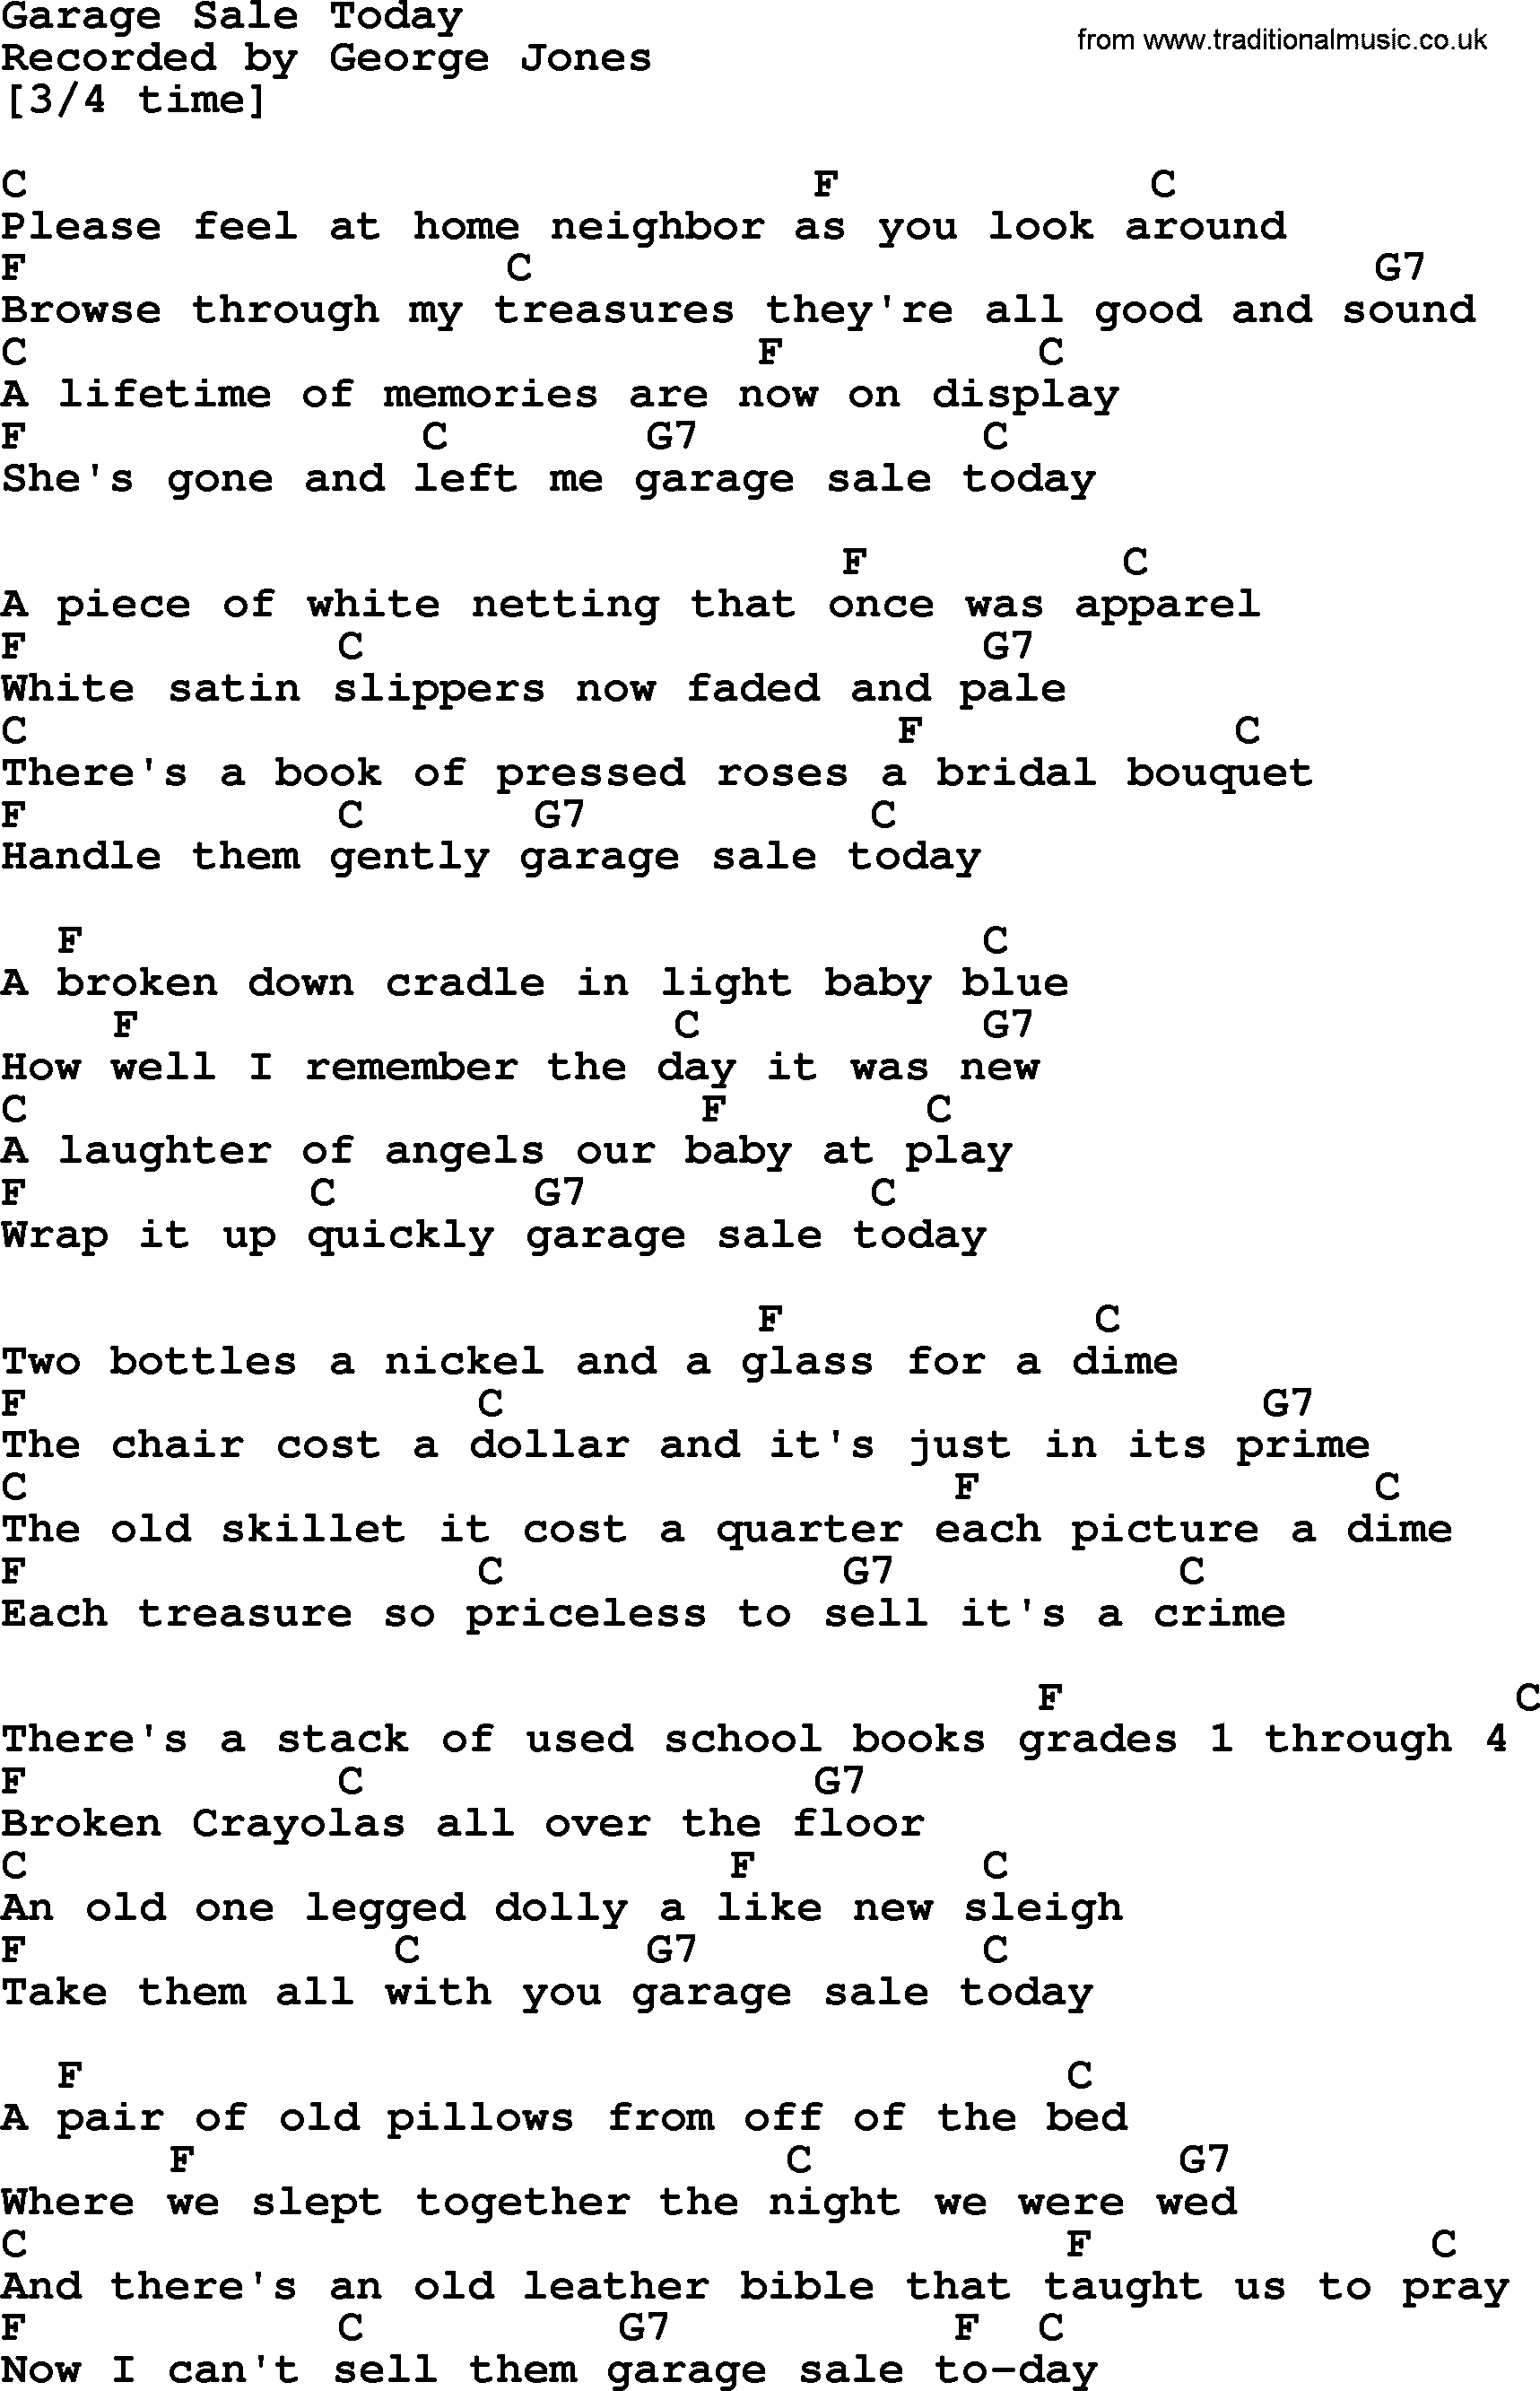 George Jones song: Garage Sale Today, lyrics and chords